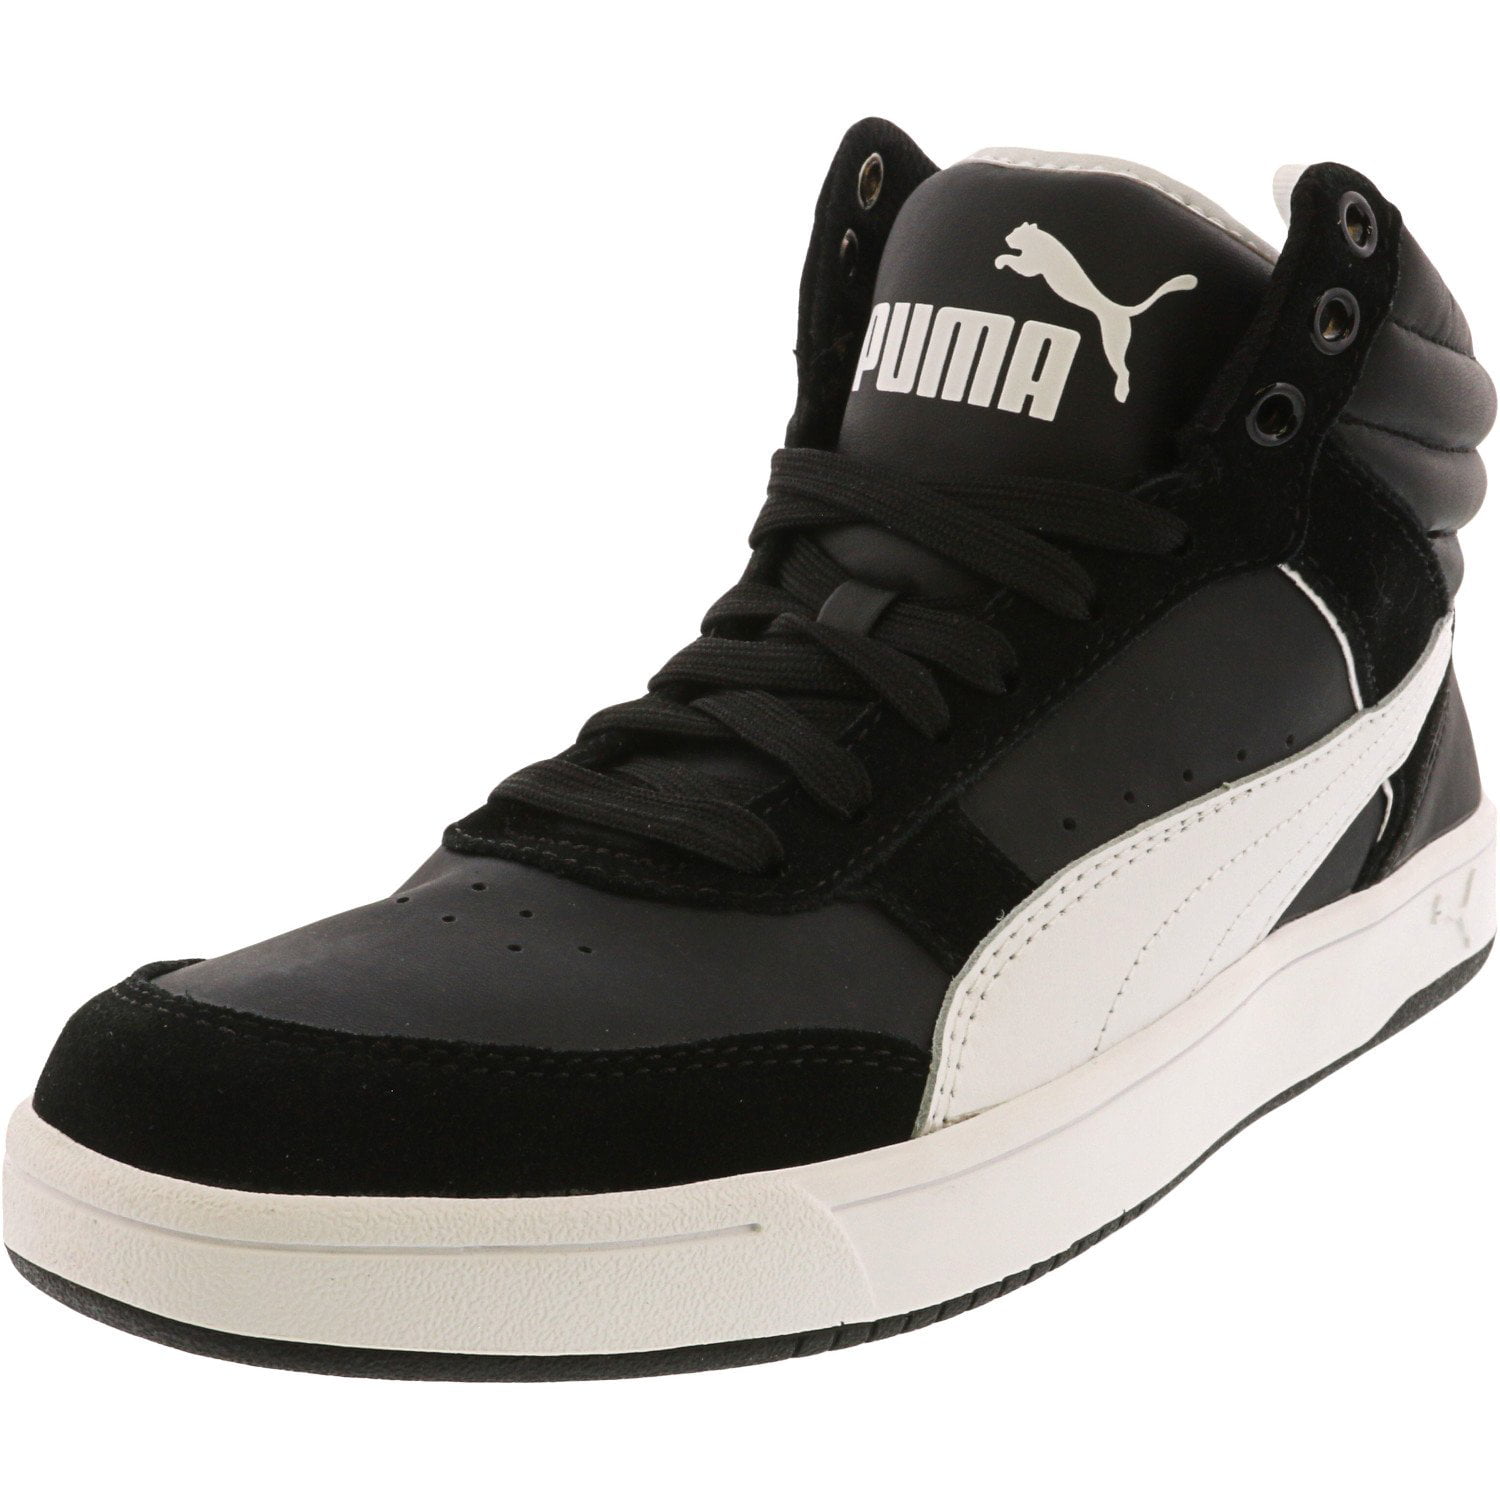 PUMA - Puma Men's Rebound Street V2 Black / White Mid-Top Sneaker - 10M ...